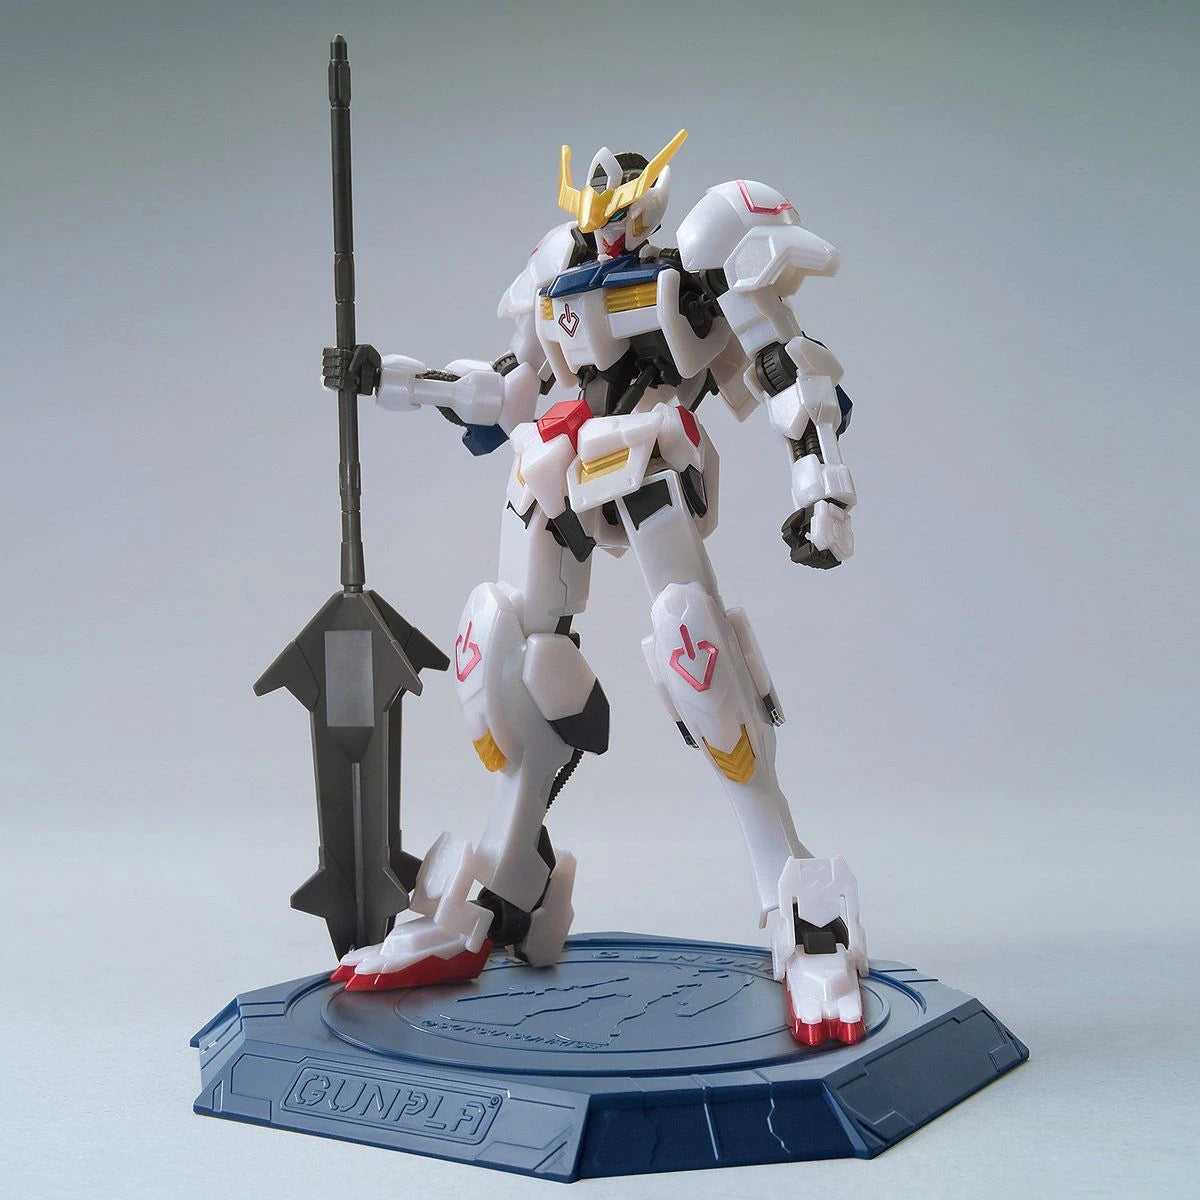 Gundam Base Limited HG IBO Gundam Barbatos [Metallic Gloss Injection]